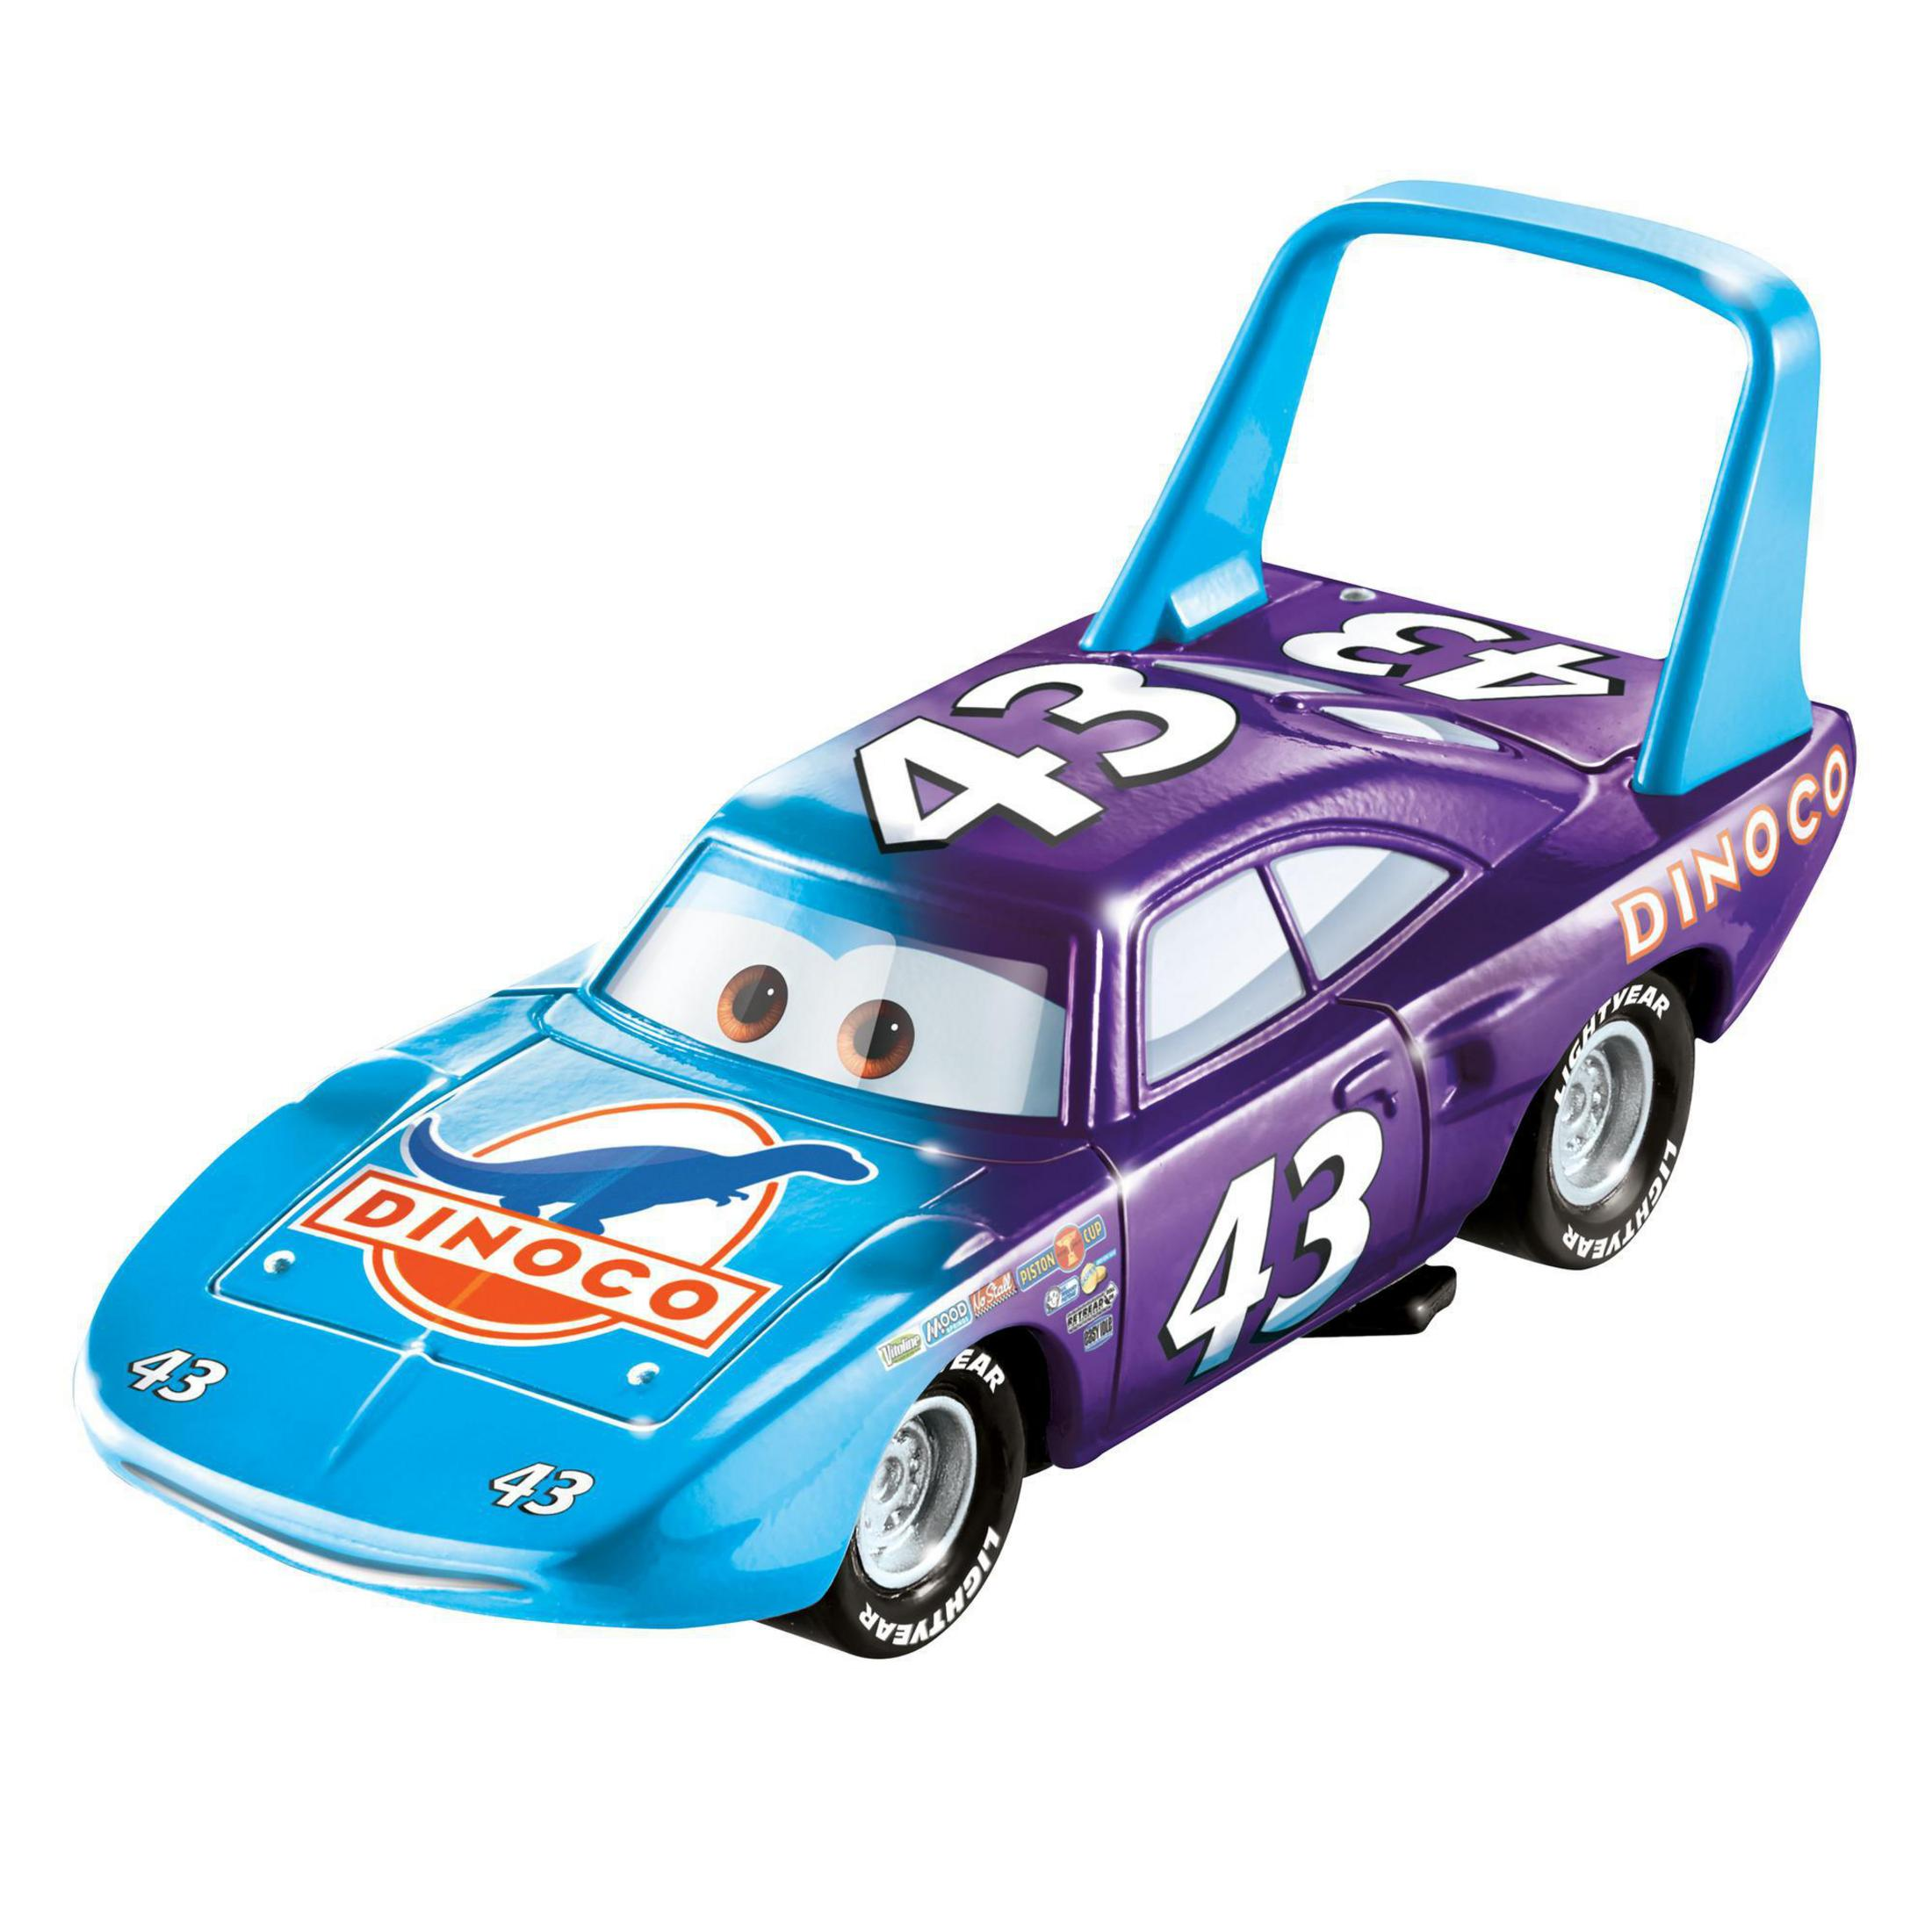 FARBWECHSEL FAHRZEUGE SORTIMENT Mehrfarbig GYM69 Spielzeugauto CARS